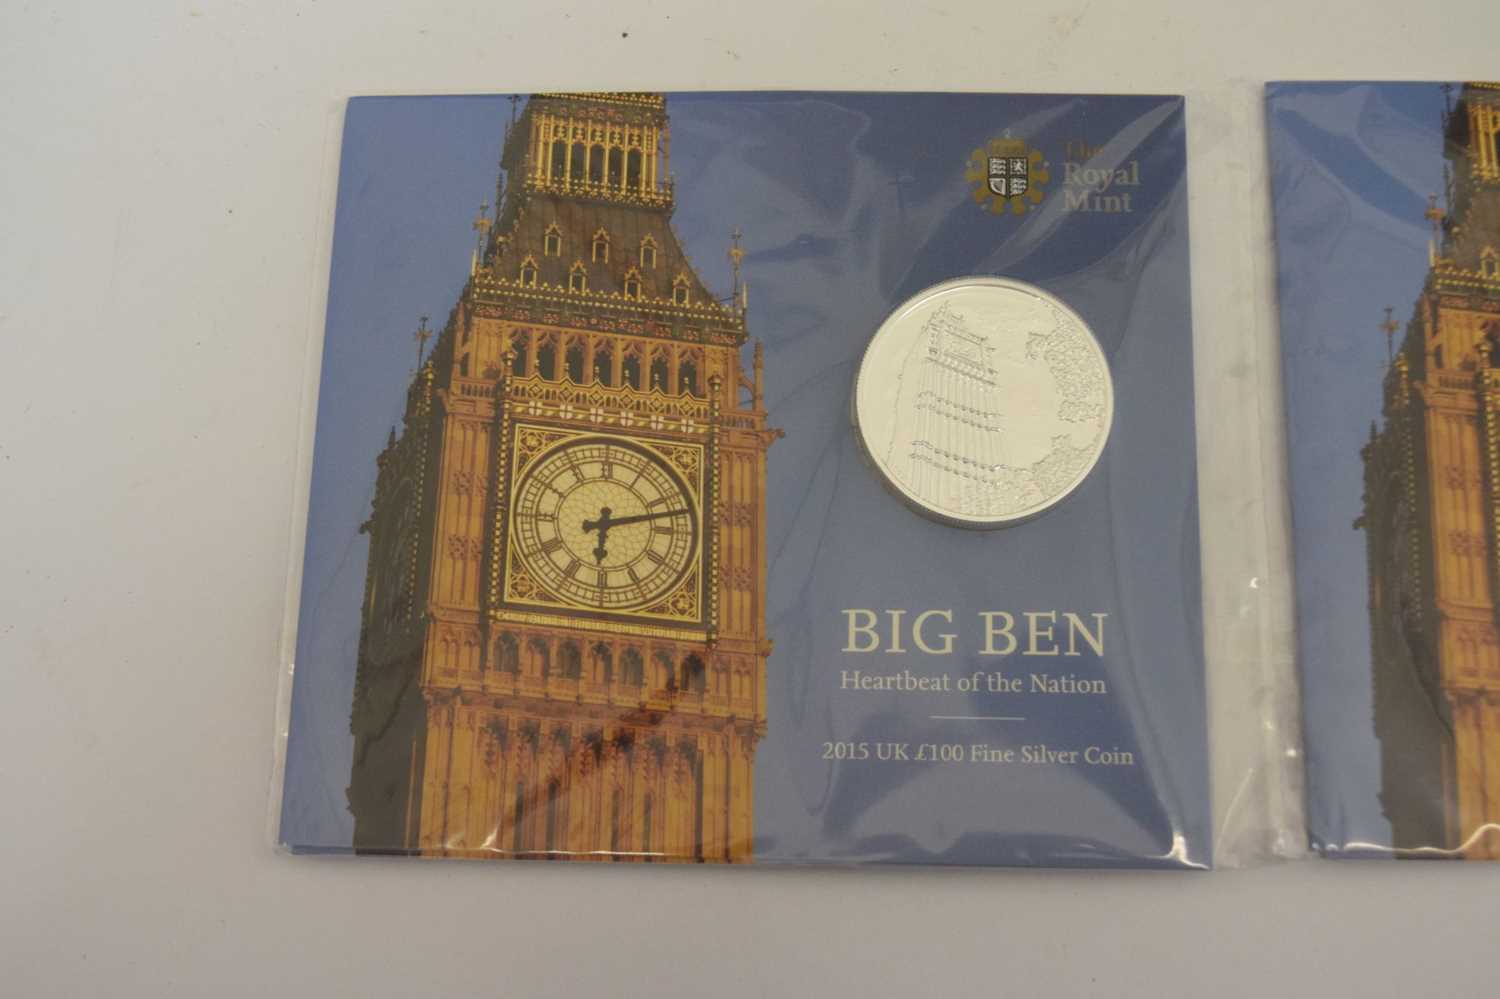 Two Royal Mint Elizabeth II UK fine silver £100 Coins, 2015 - Image 3 of 5